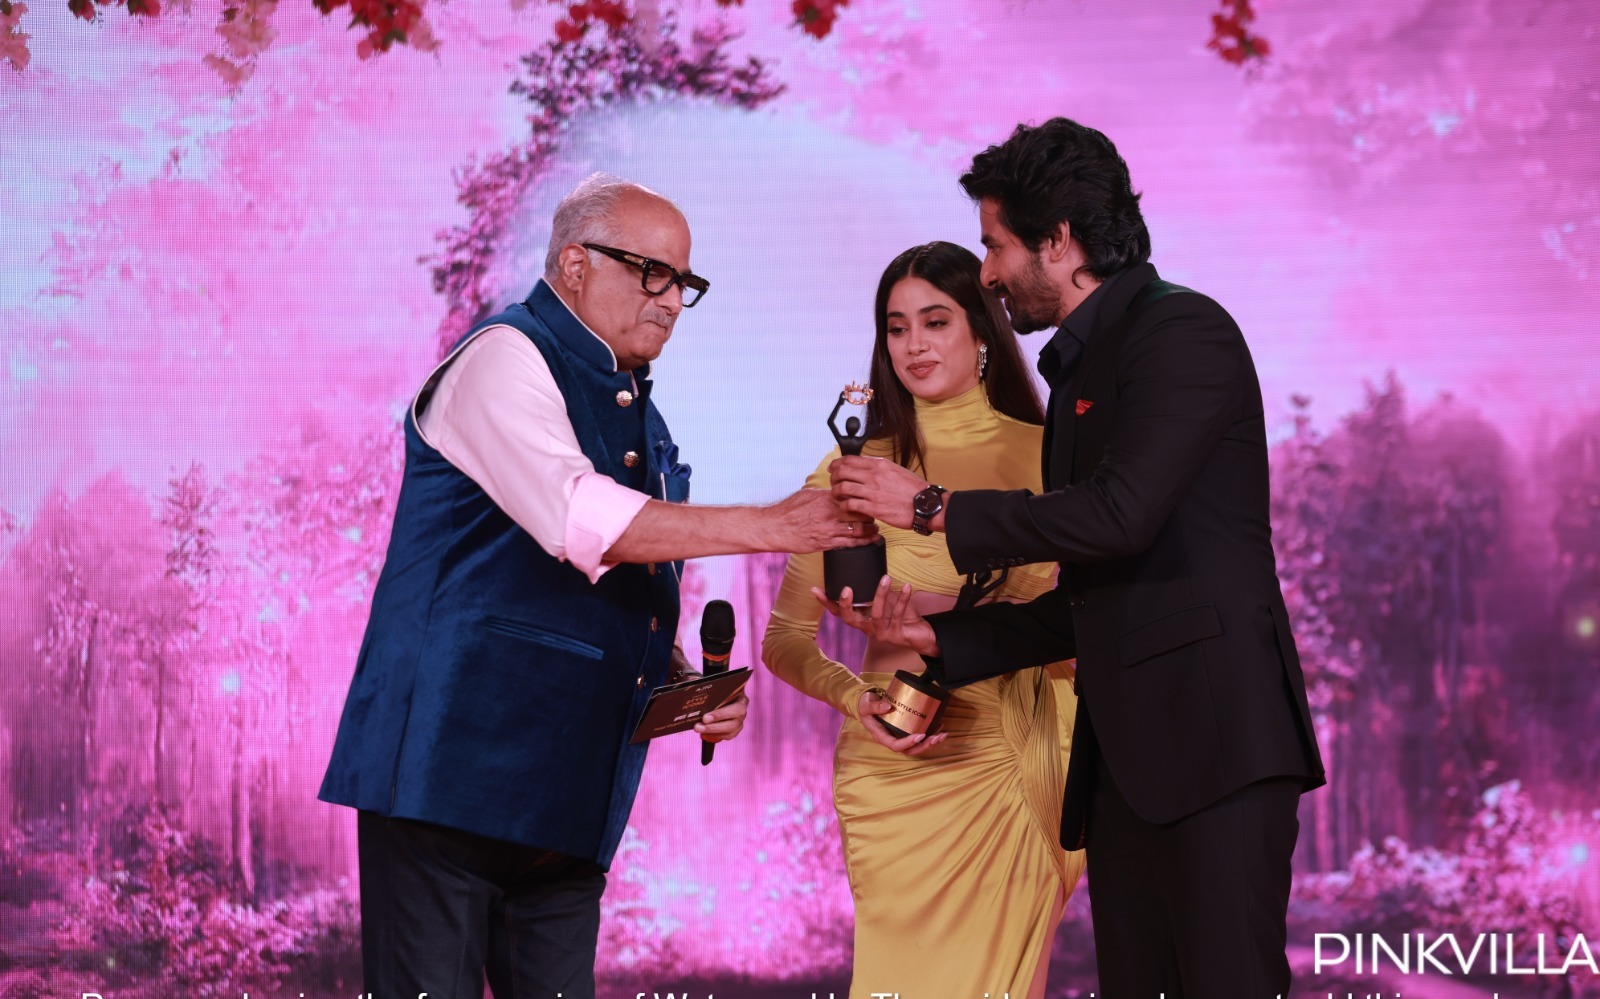 Pinkvilla Style Icons Inside PICS: Sivakarthikeyan and Janhvi Kapoor share stage 